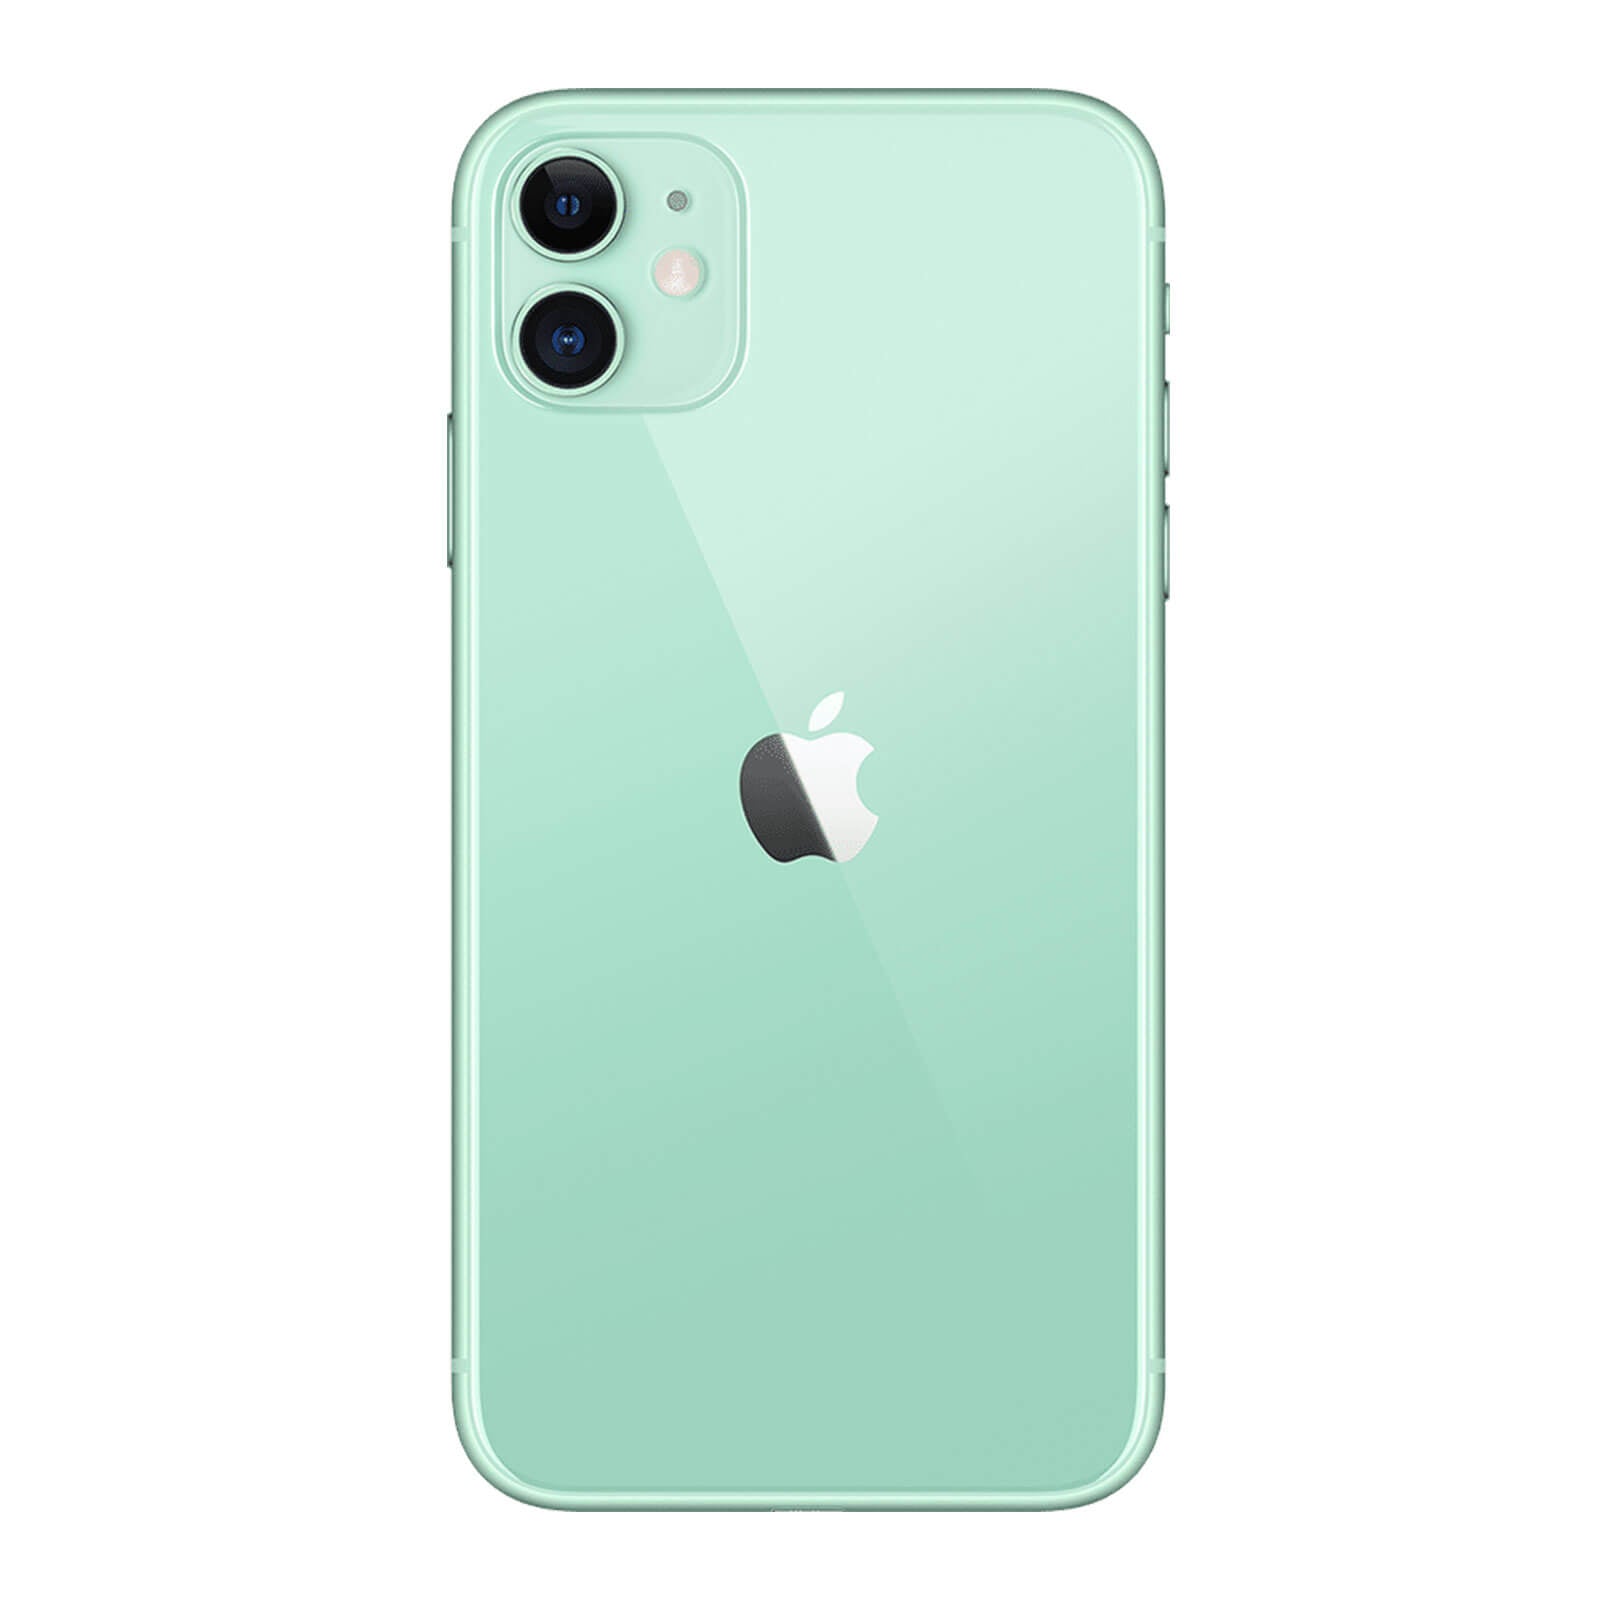 Apple iPhone 11 256GB Green Pristine - T-Mobile